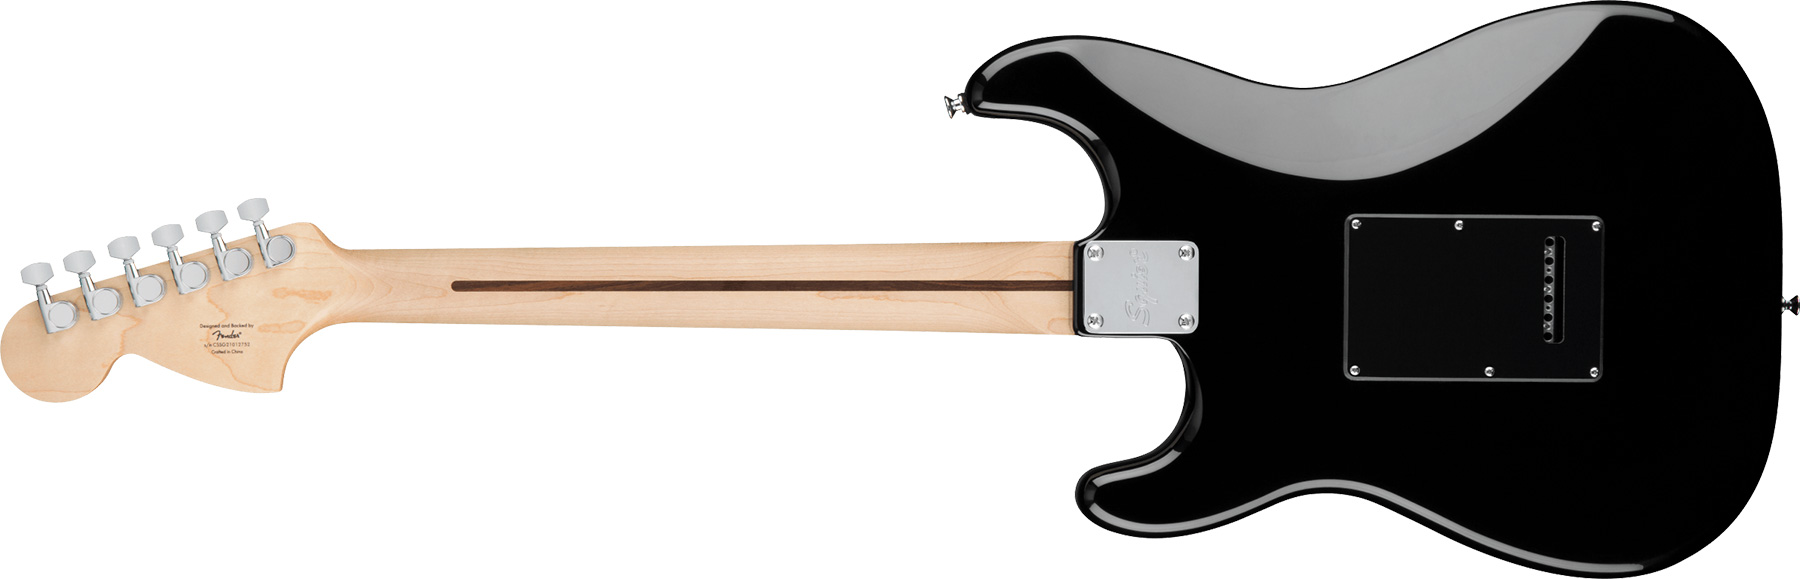 Squier Strat Affinity Black Pickguard Fsr Ltd Hss Trem Lau - Black - Guitarra eléctrica con forma de str. - Variation 1